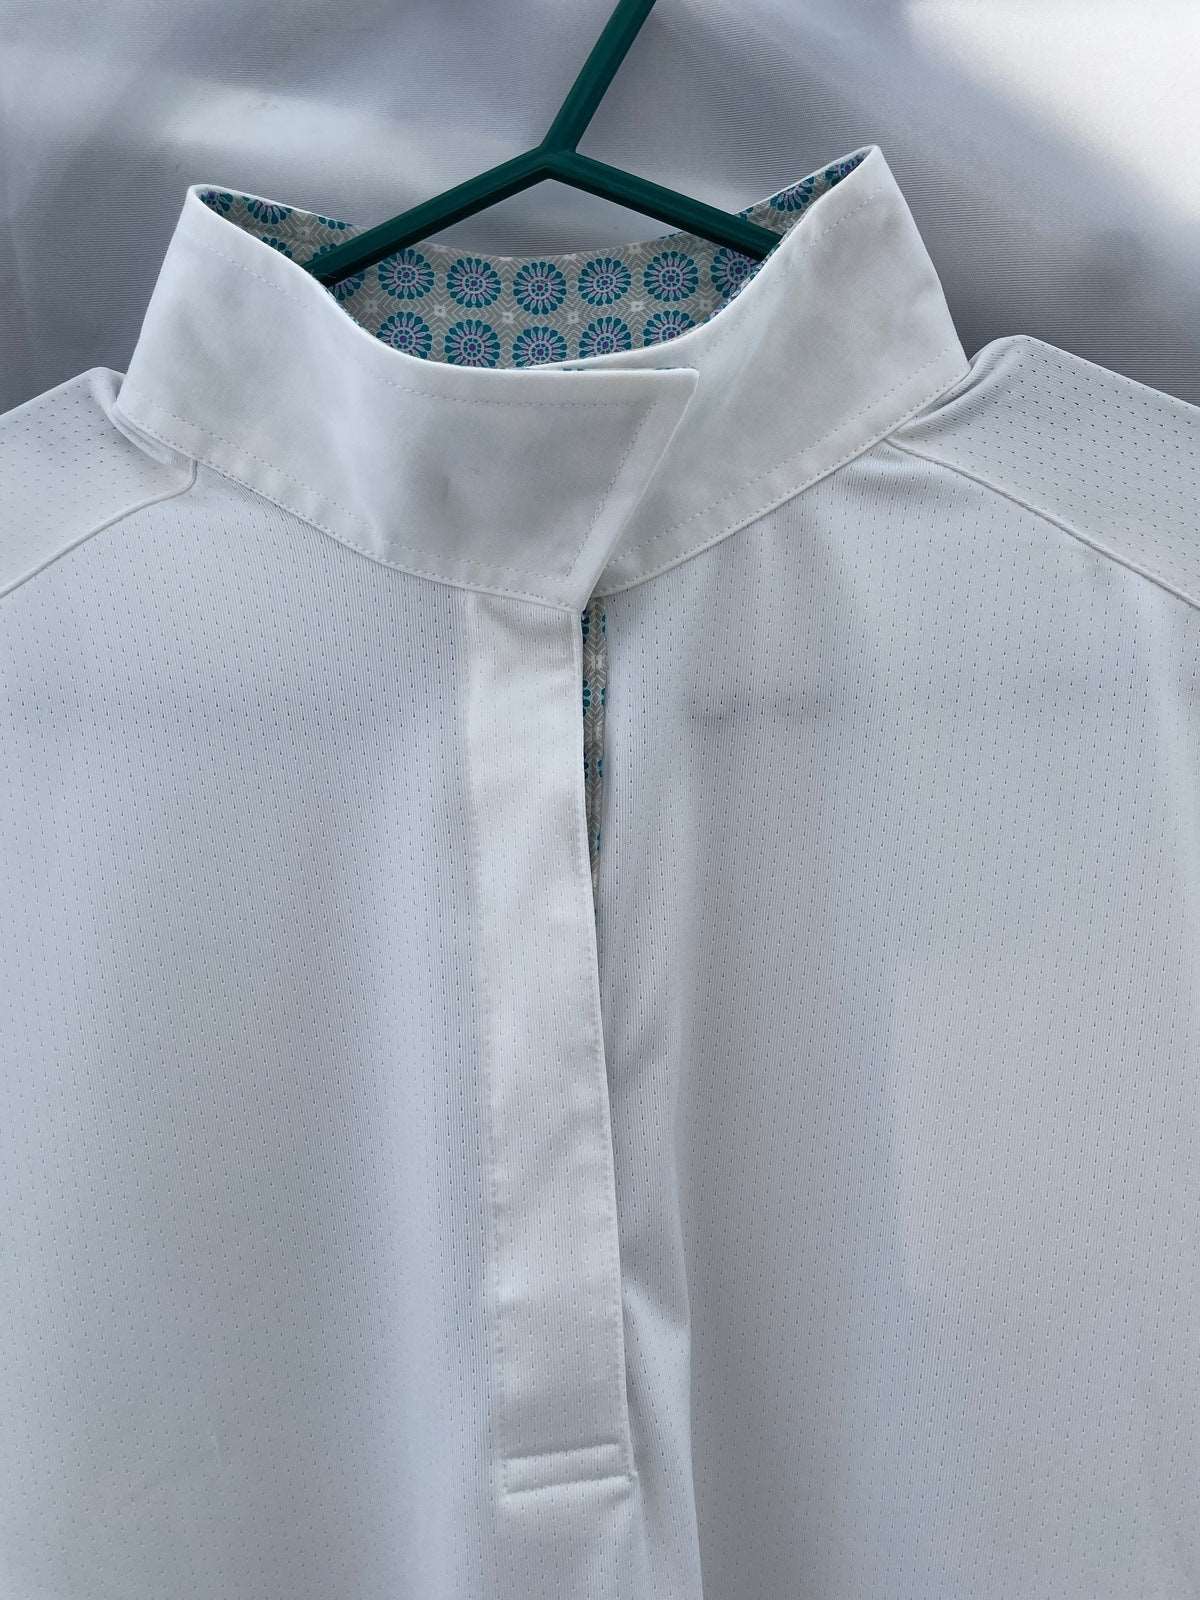 ThriftedEquestrian Clothing XL Essex Show Shirt - XL